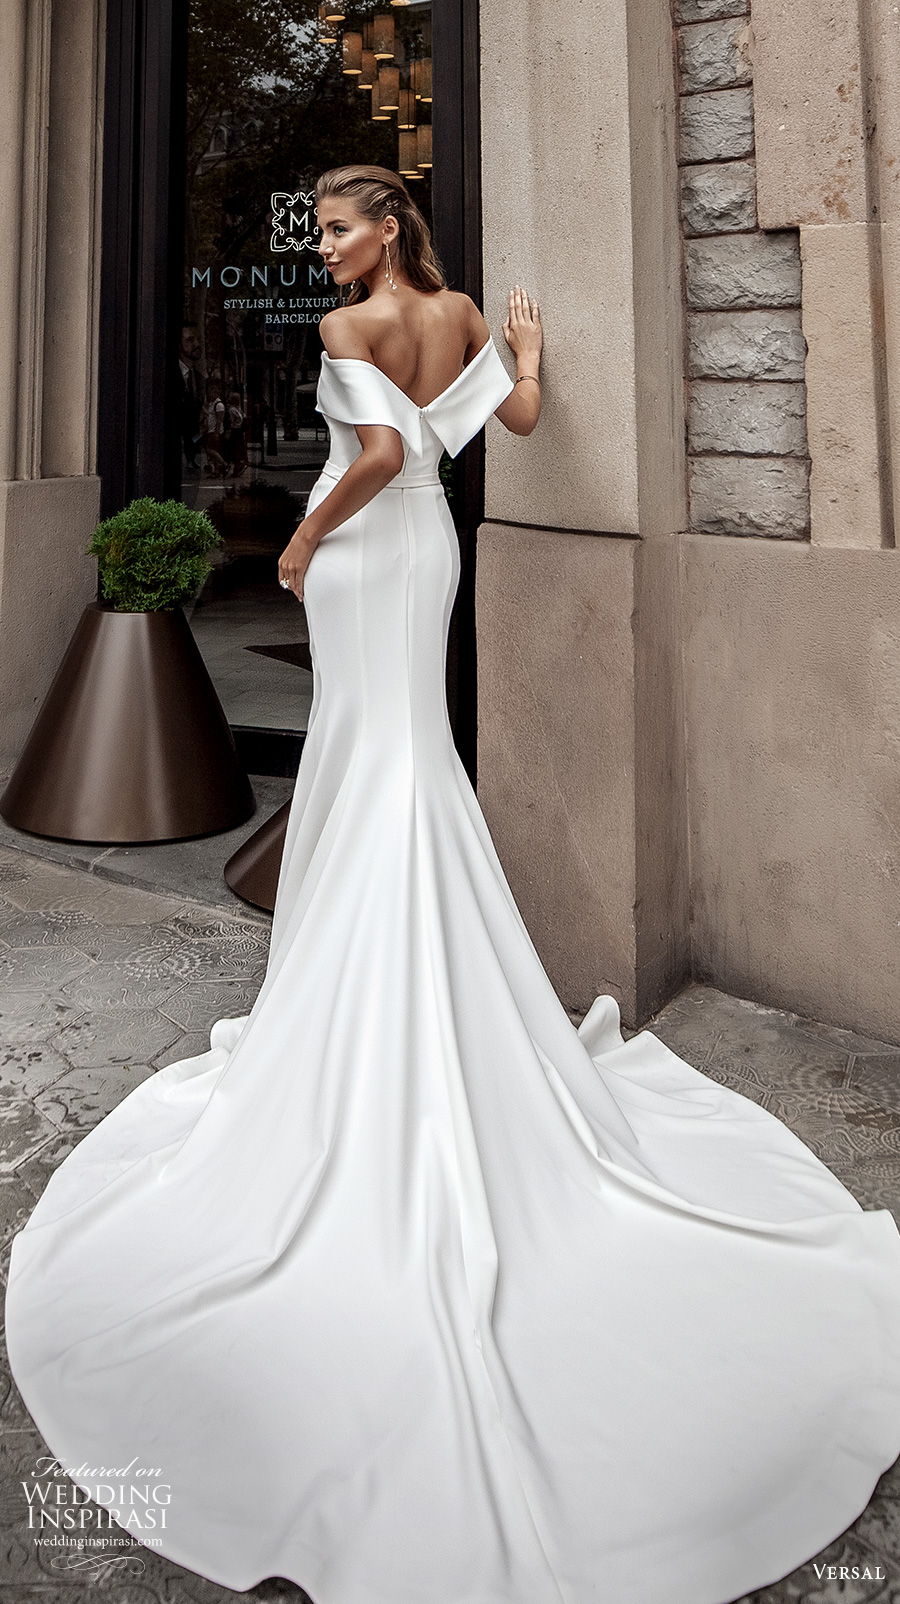 versal 2020 bridal off the shoulder v neck simple minimalist slit skirt elegant glamorous fit and flare wedding dress mid back chapel train (19) bv